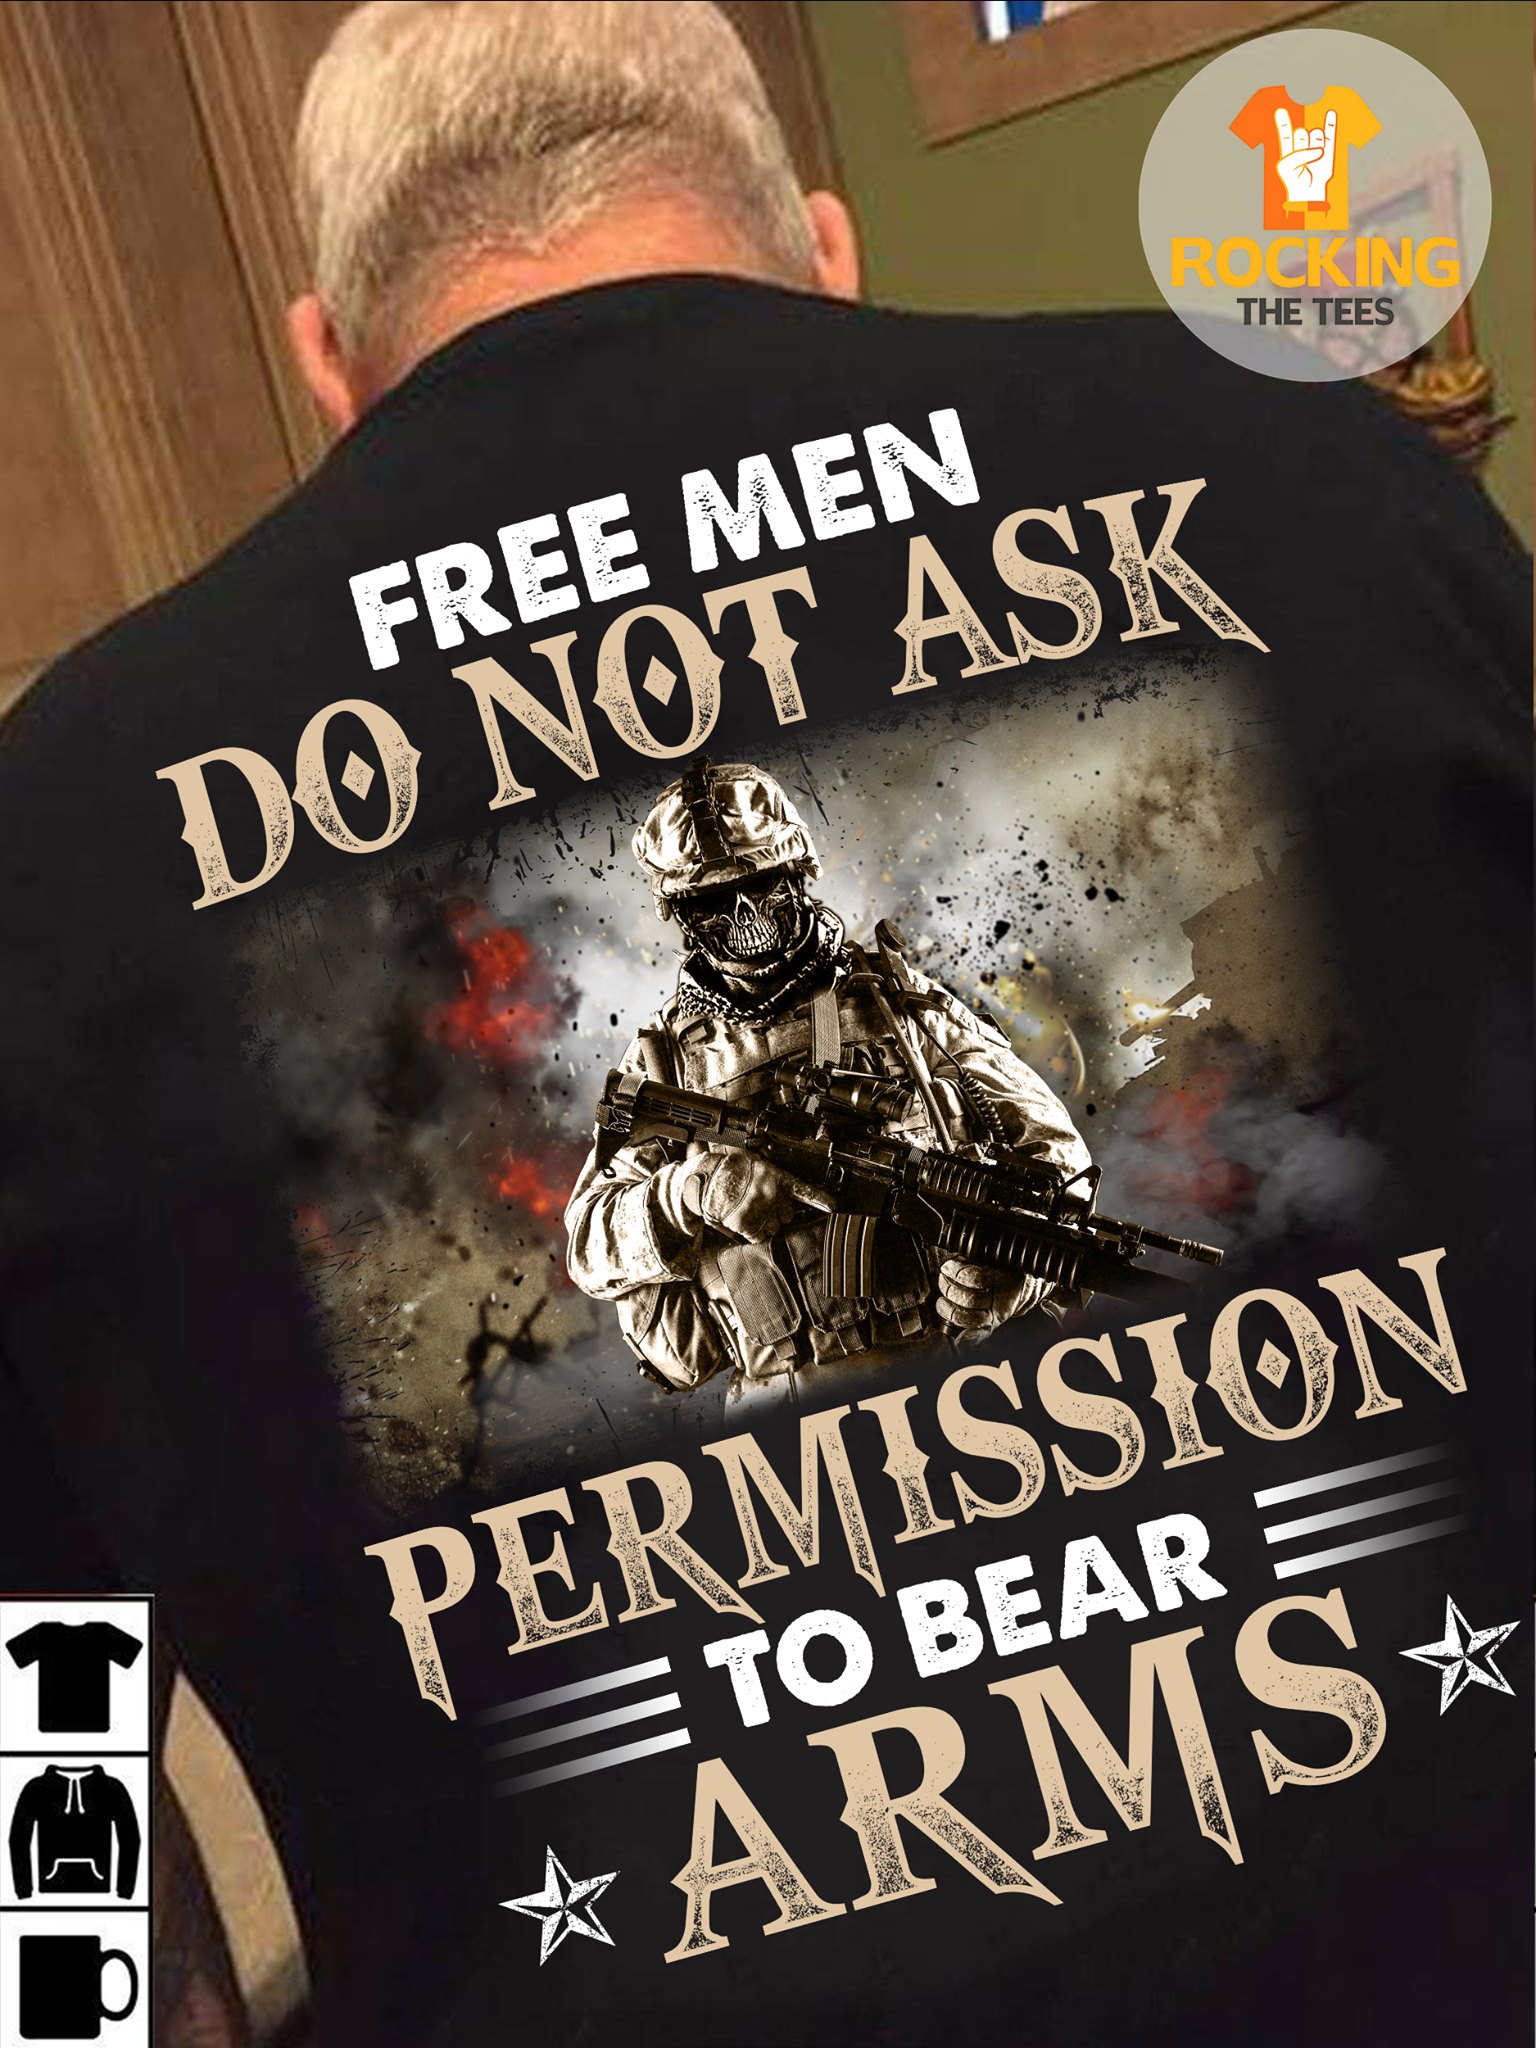 Free men do not ask permission to bear arms - Evil veteran